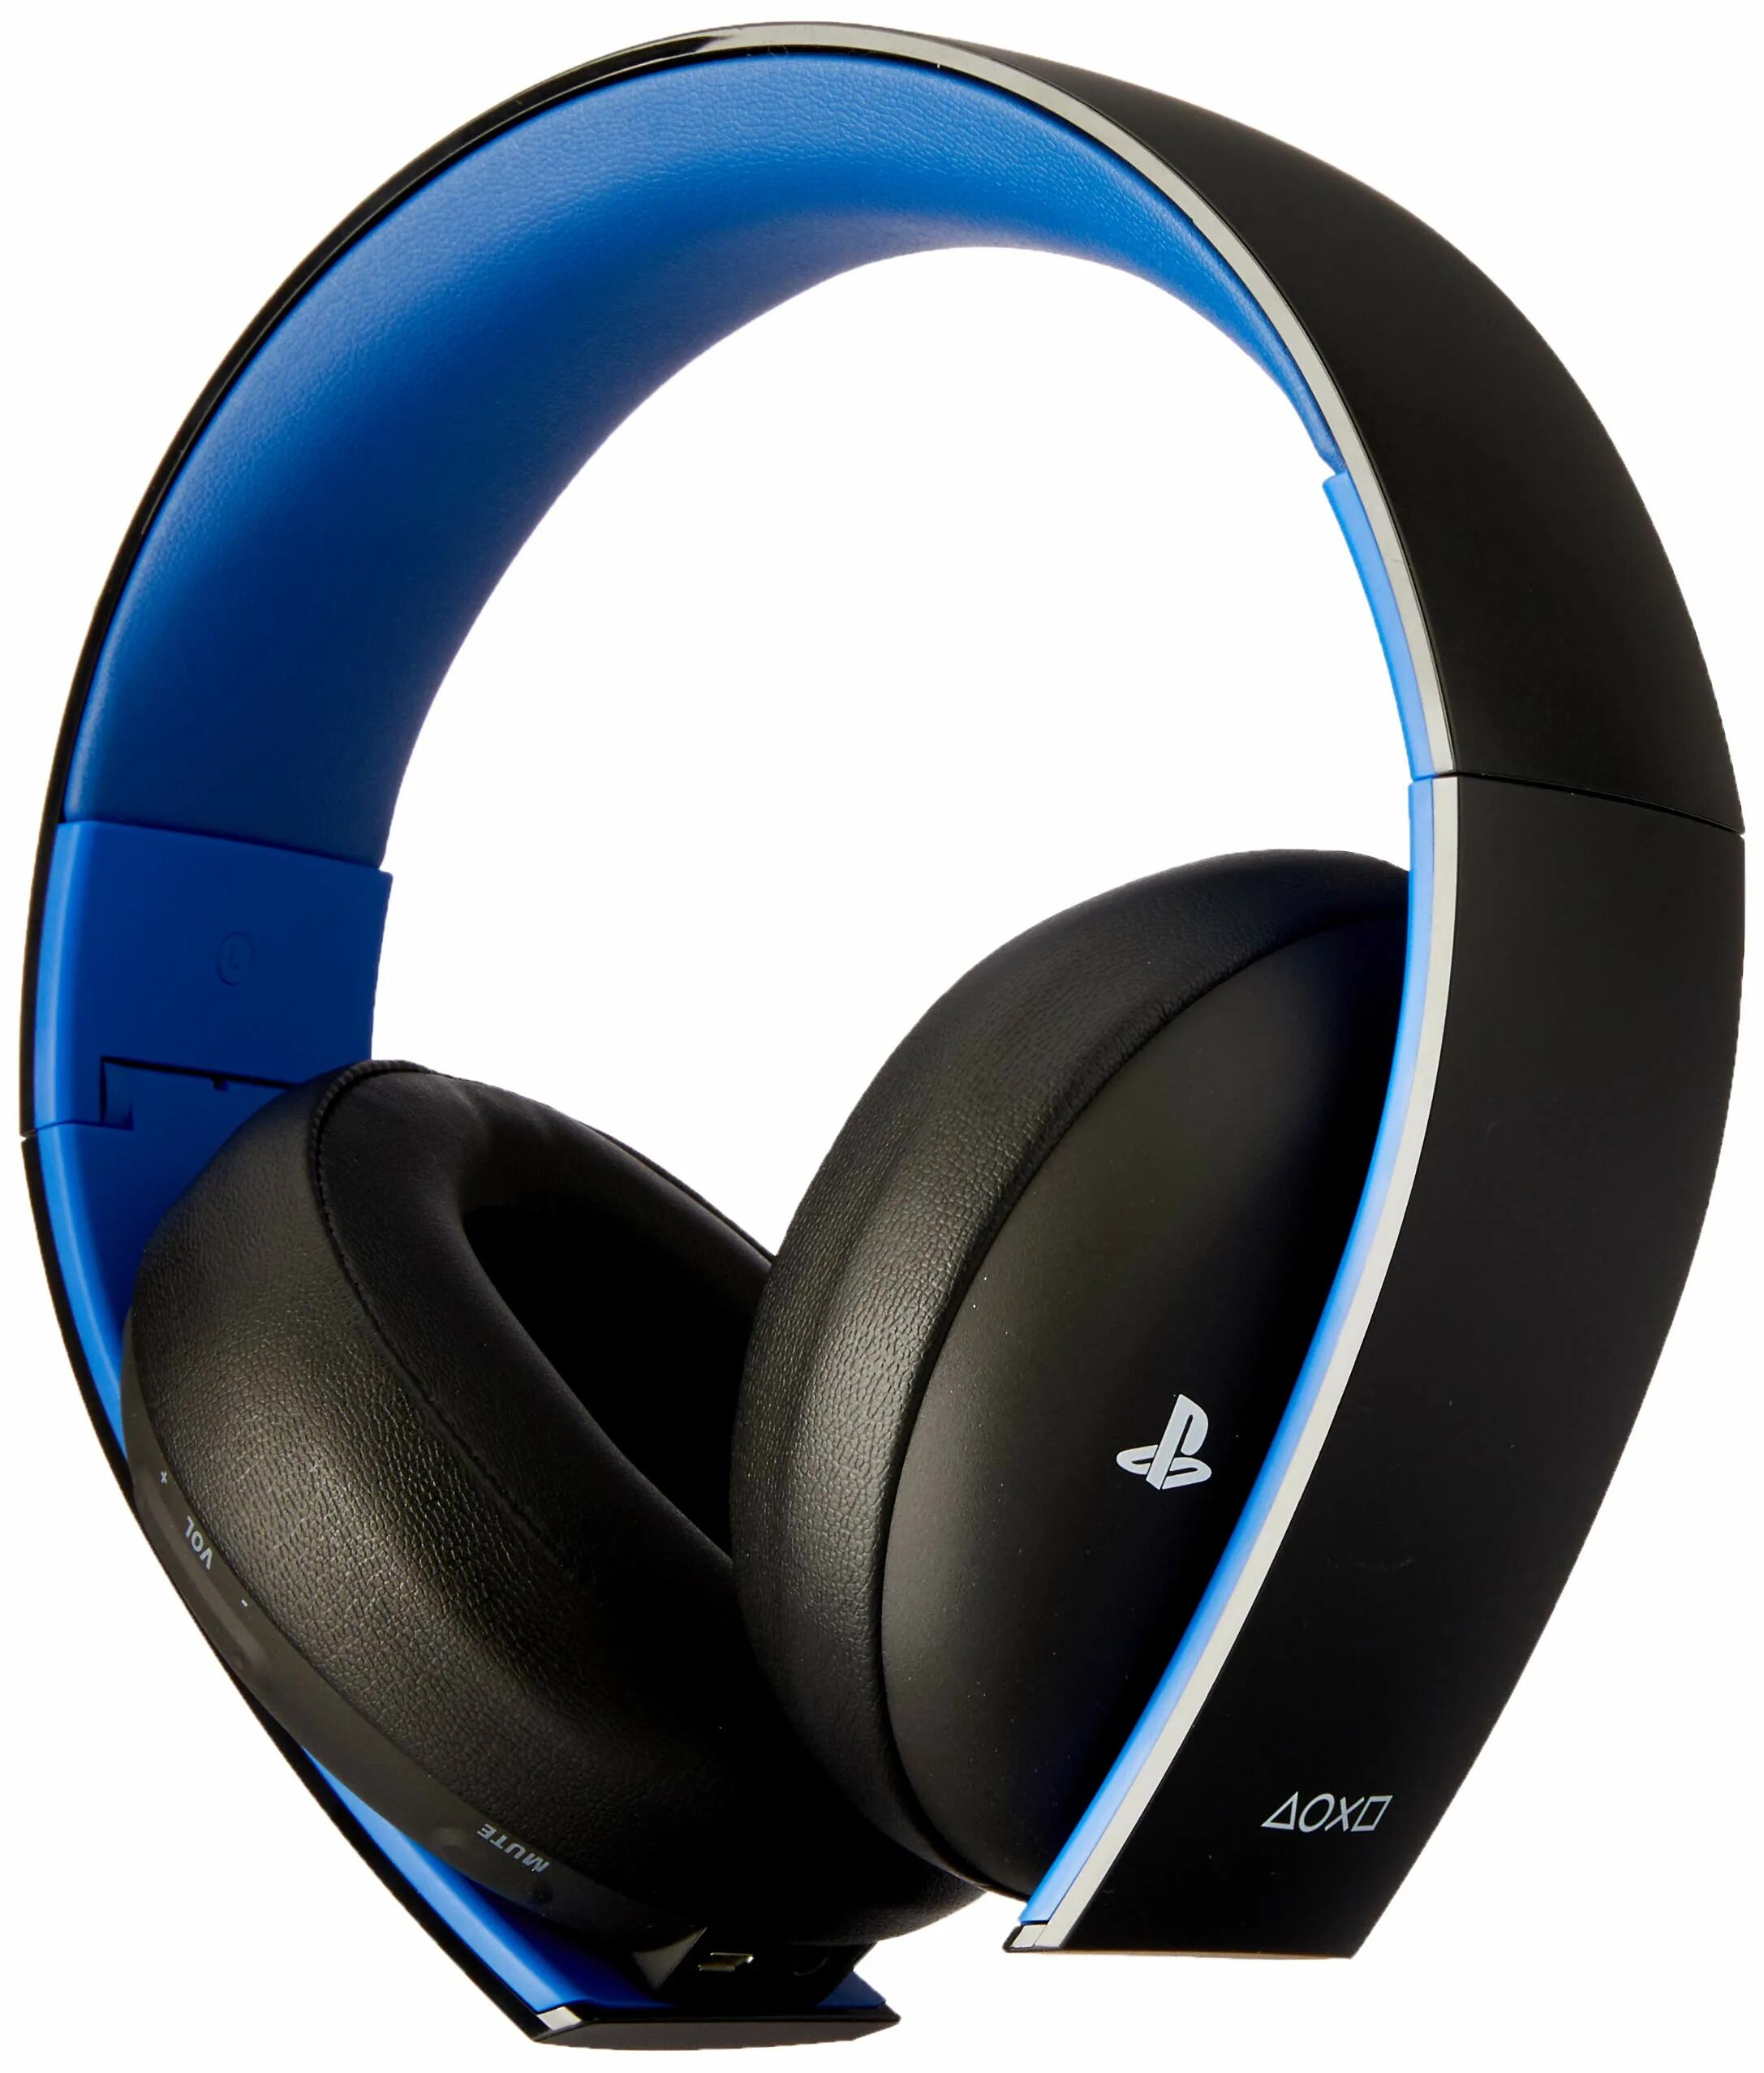 Ps5 какие наушники. Sony PLAYSTATION Wireless stereo Headset 2.0. Sony ps3 Wireless stereo Headset. Наушники Sony ps3 Wireless stereo Headset. Наушники Sony ps4 Gold Wireless Headset.